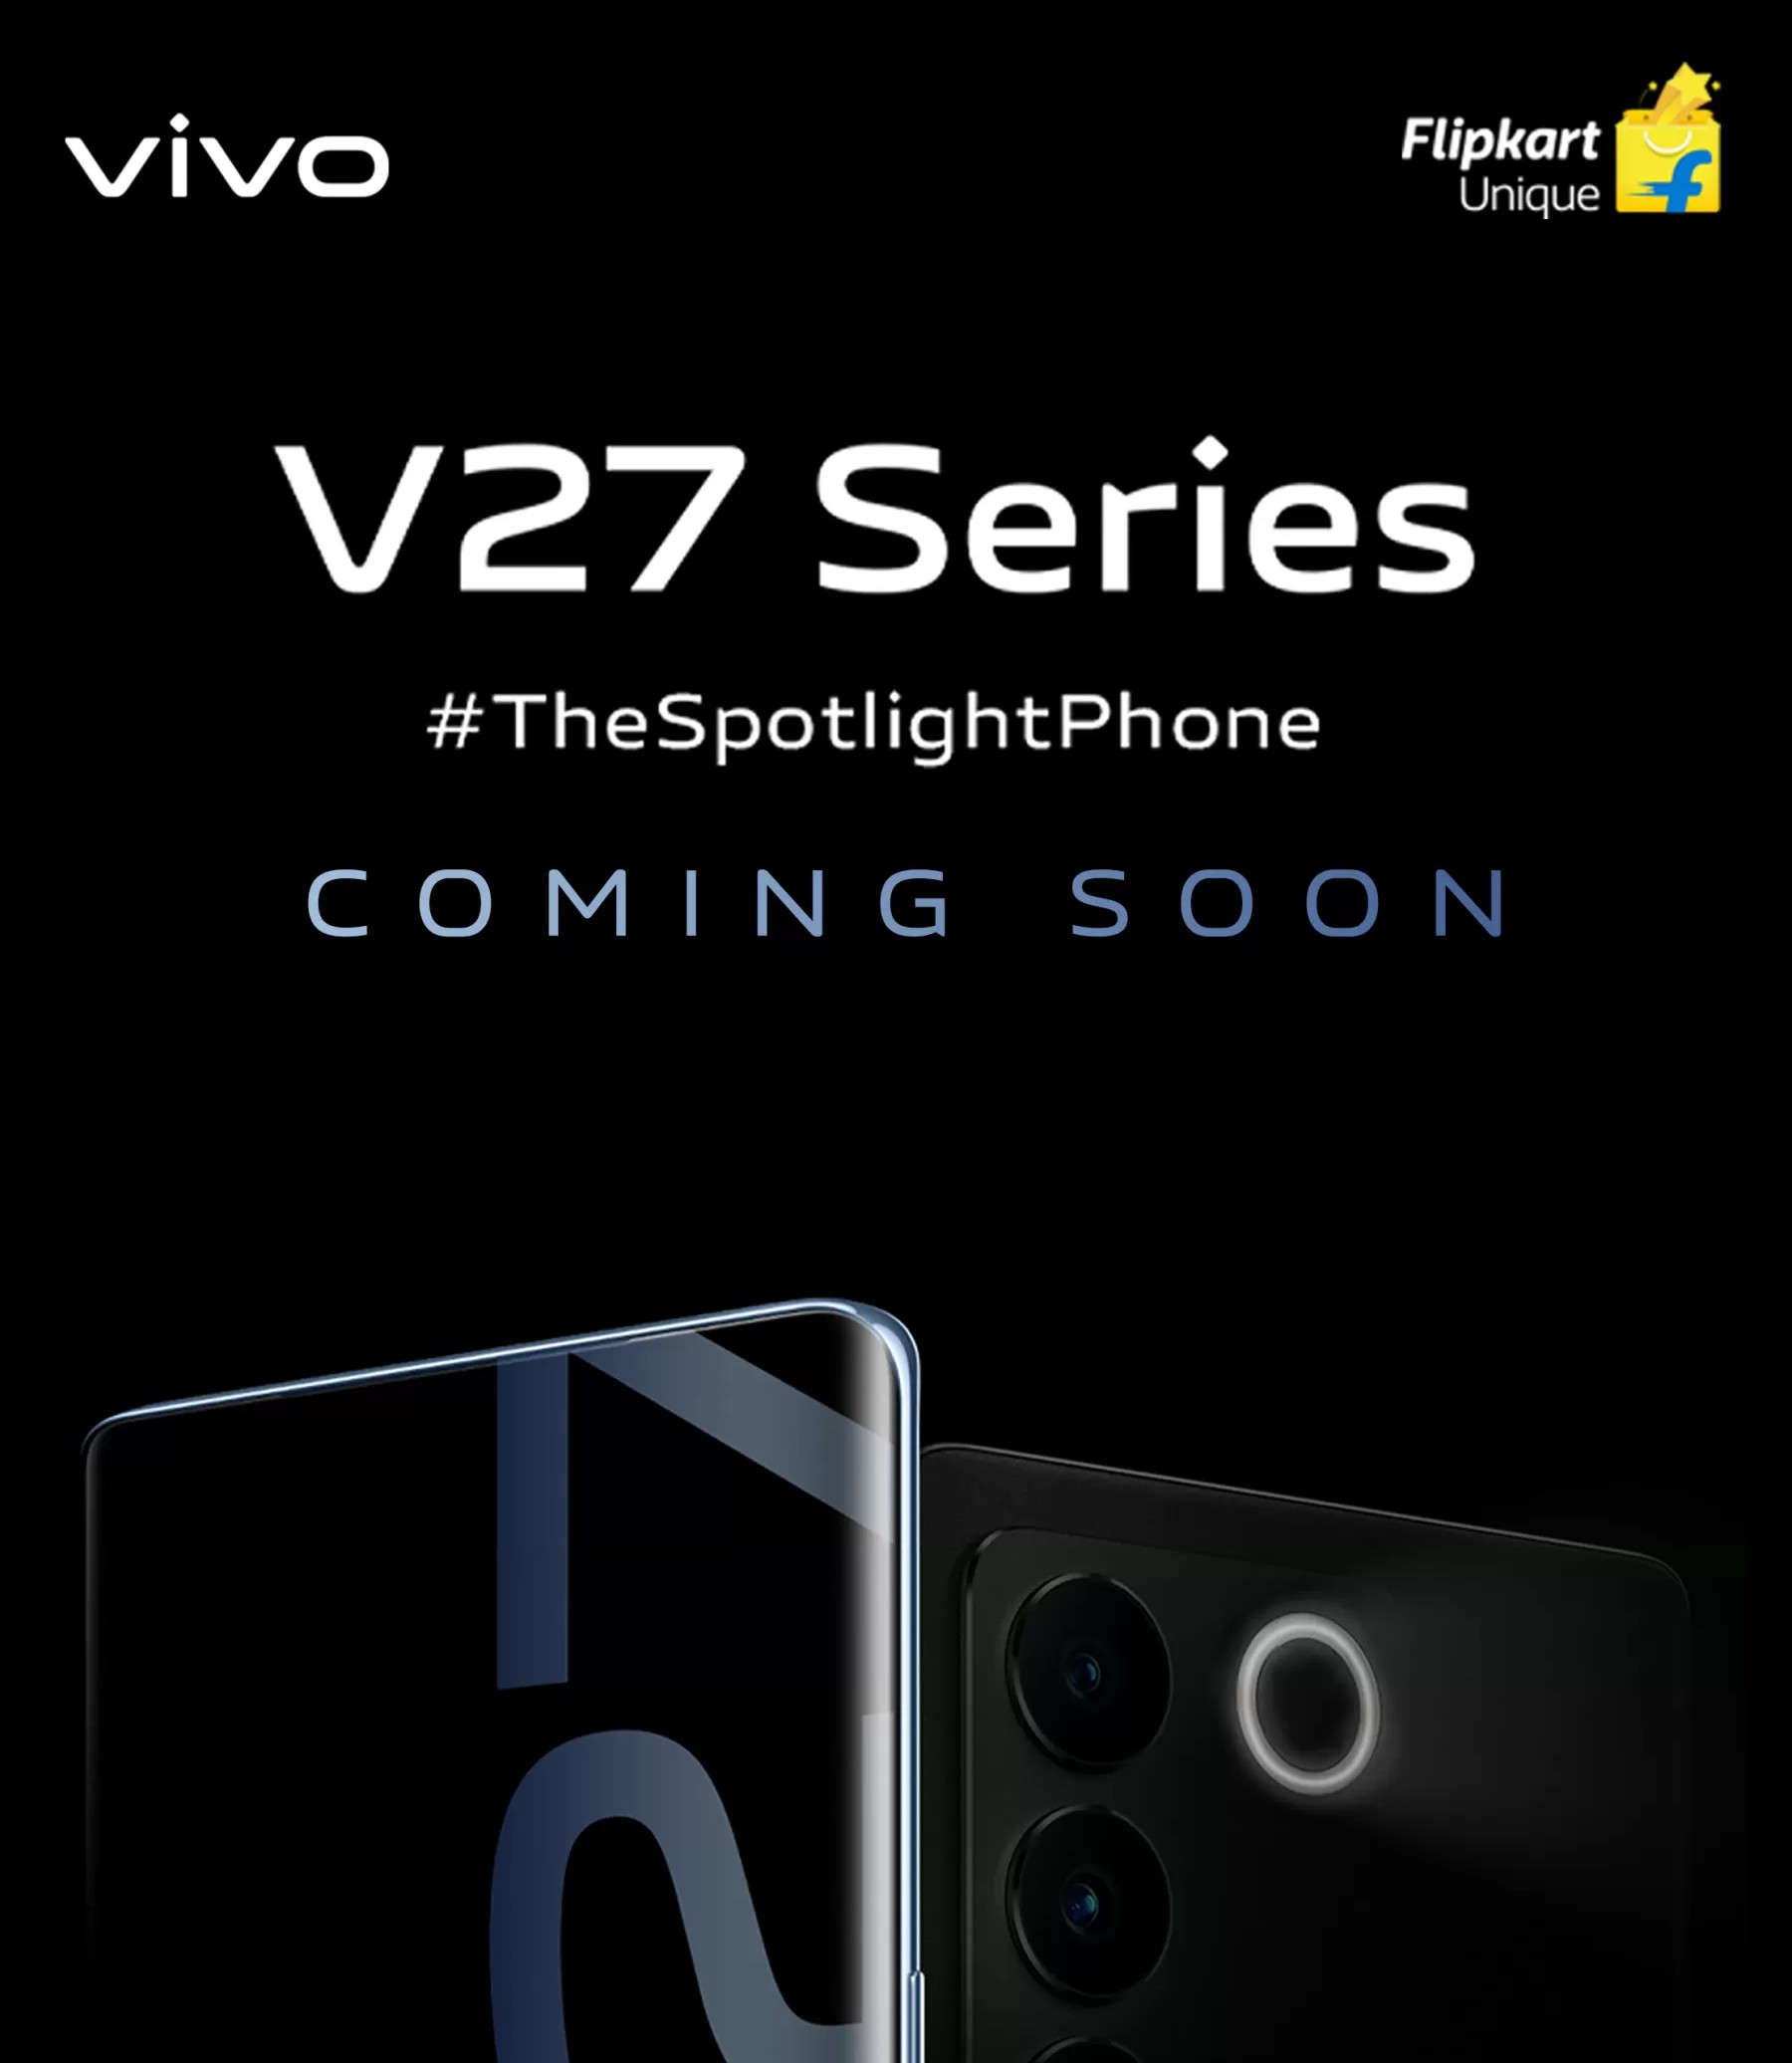 vivo teases V27 design, says the phones are coming soon - GSMArena.com news